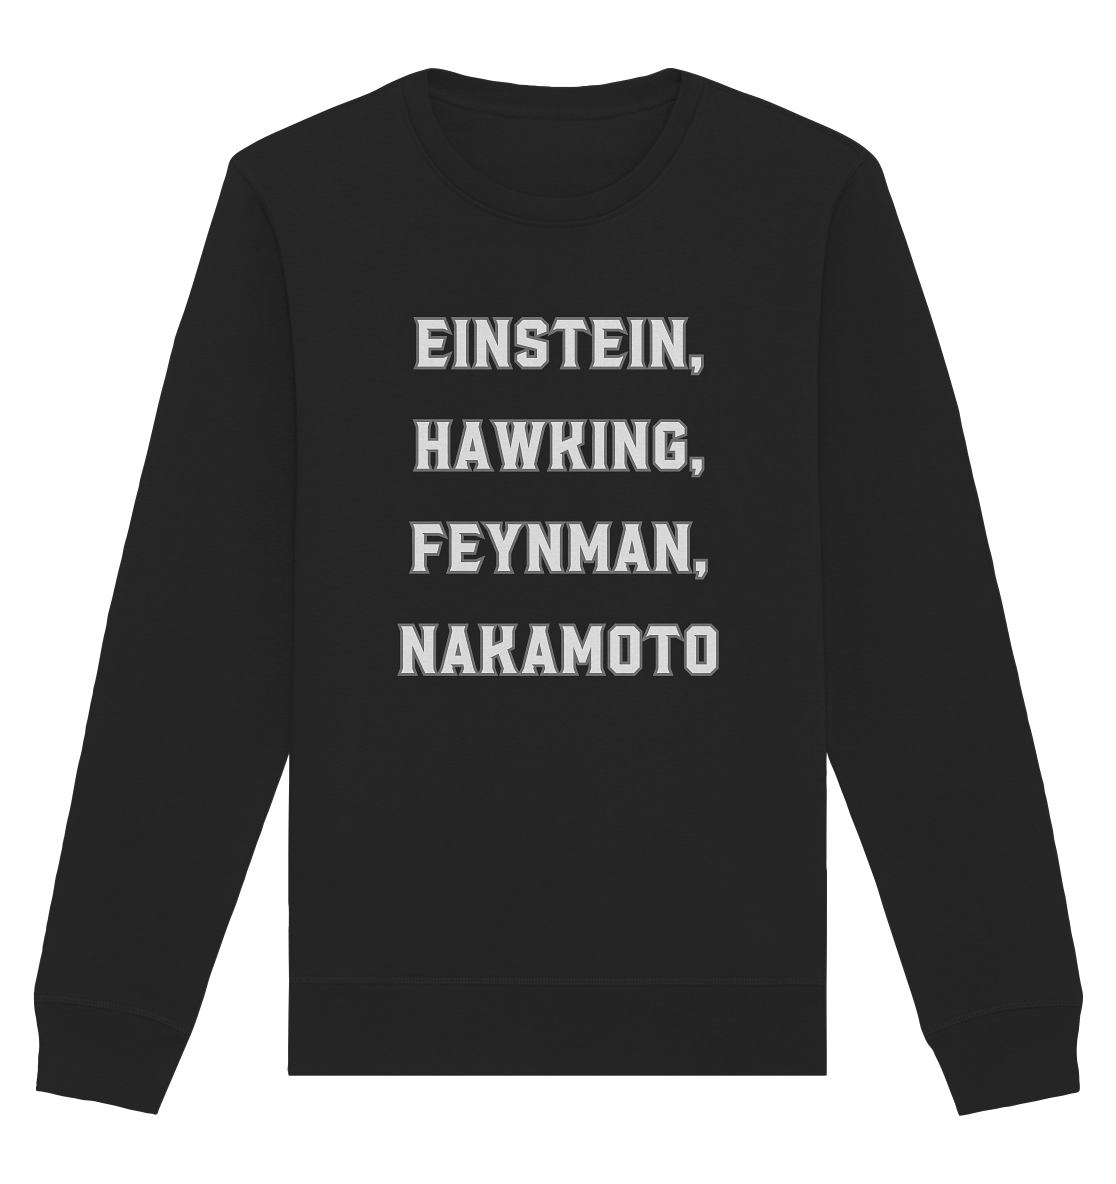 EINSTEIN, HAWKING, FEYNMAN, NAKAMOTO - Organic Basic Unisex Sweatshirt